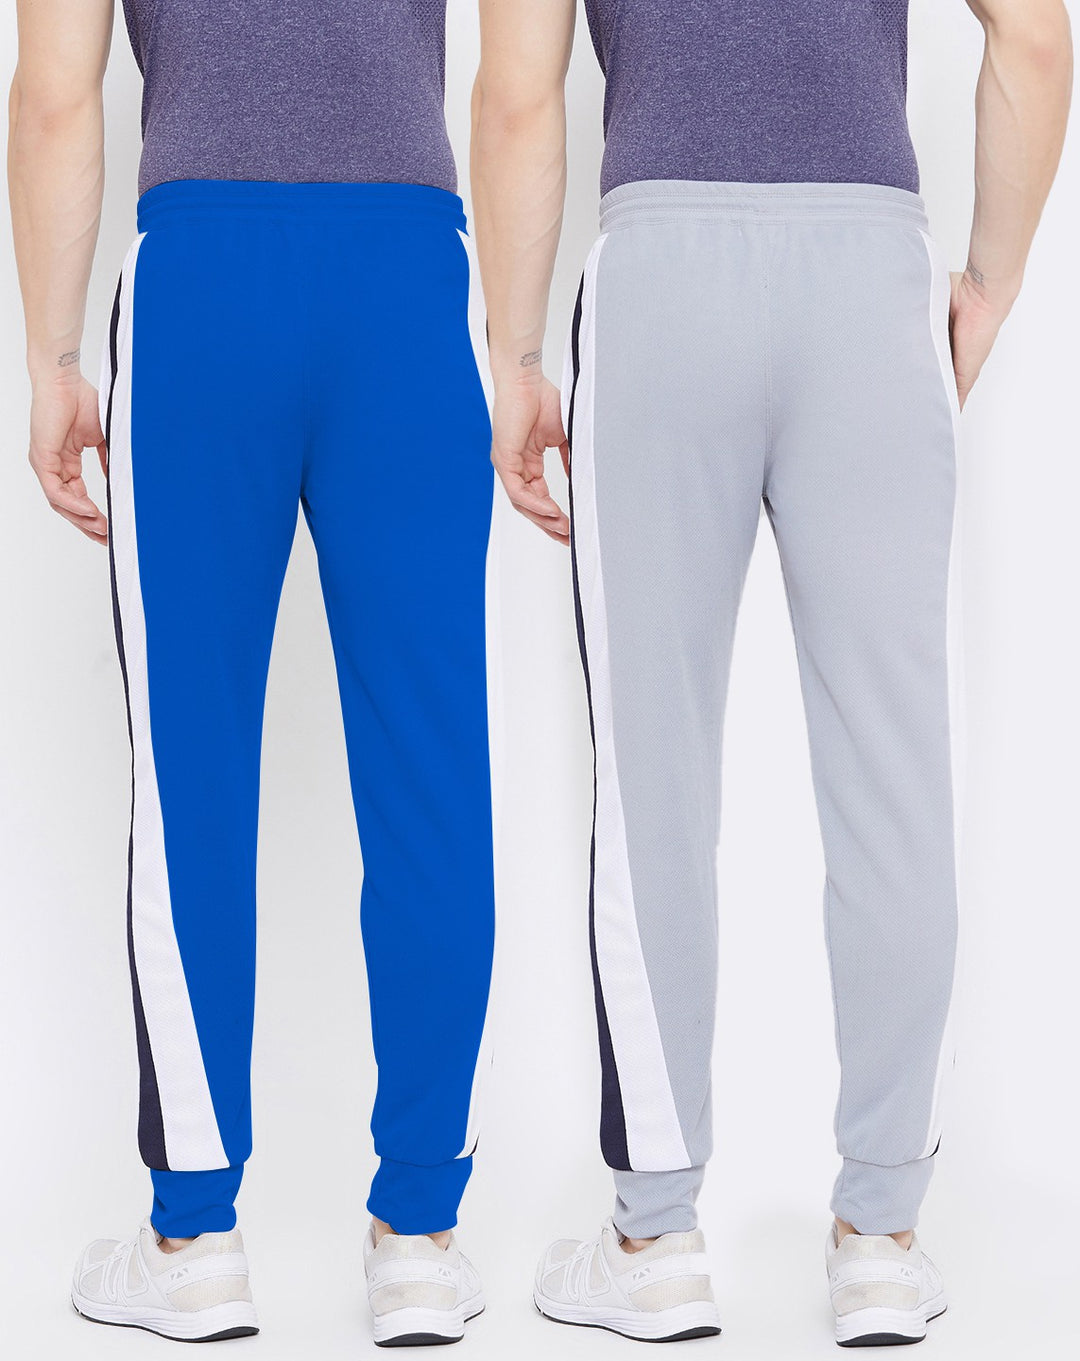 Men Solid Blue/Grey Hiking Track Pants (Pack of 2)